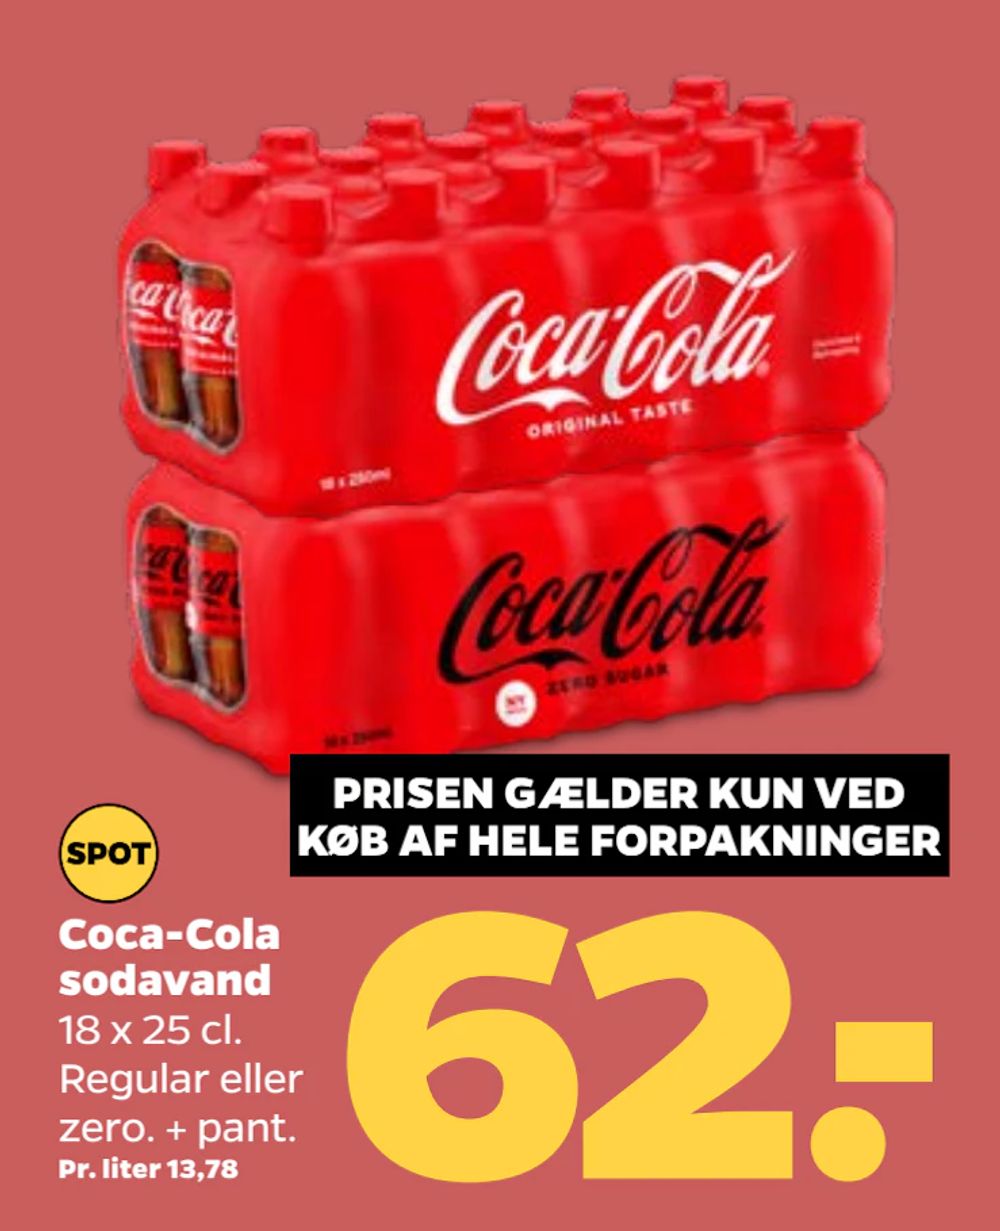 Tilbud på Coca-Cola sodavand fra Netto til 62 kr.